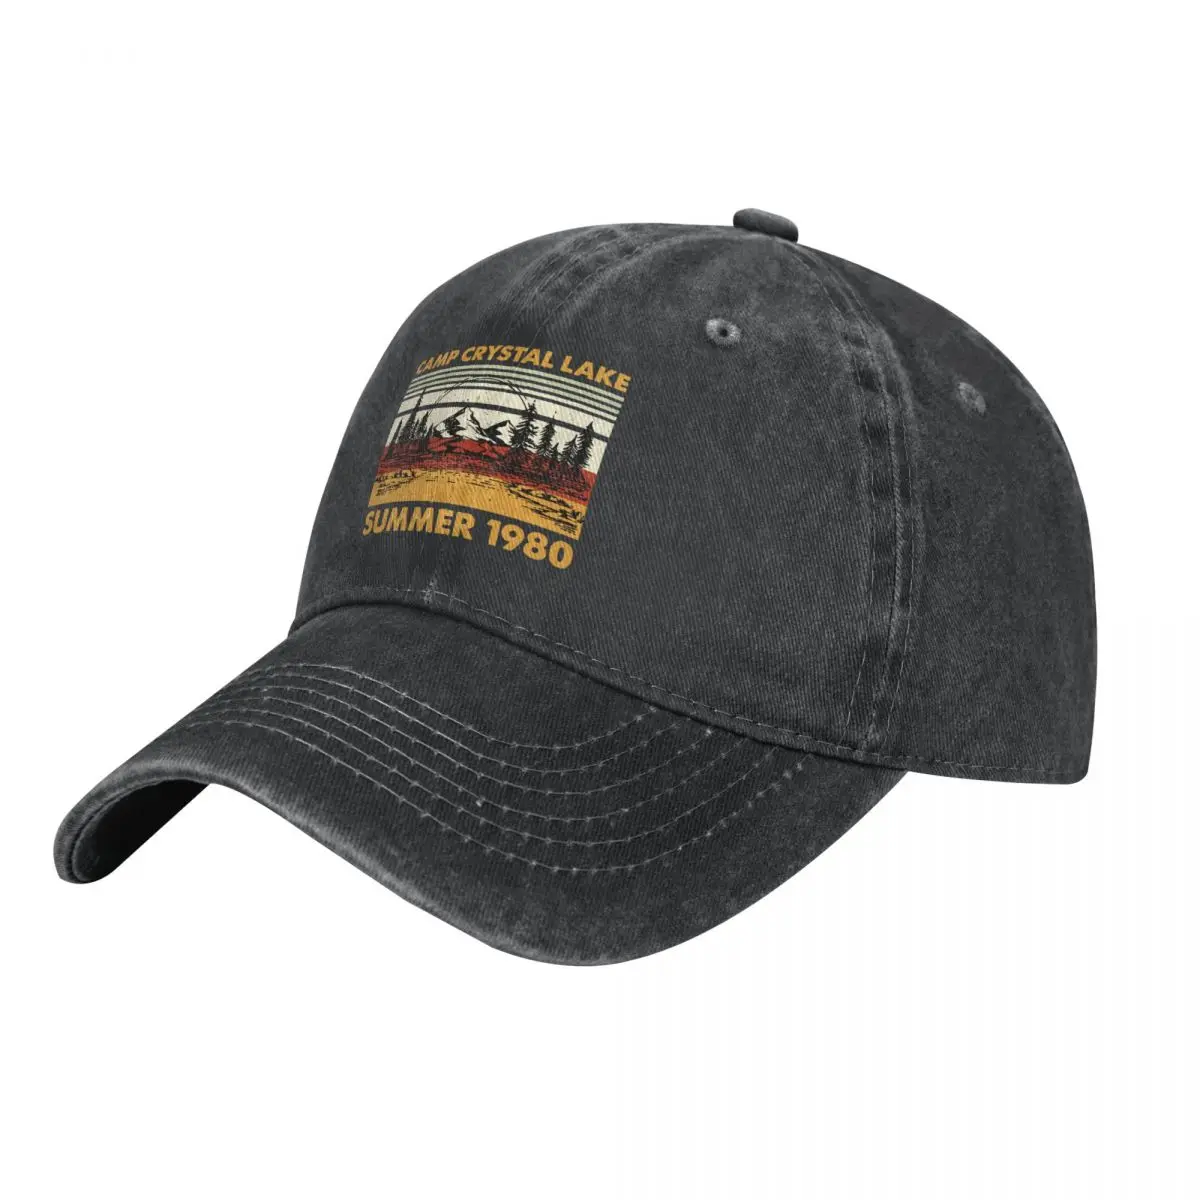 

Camp Crystal Lake Cap Cowboy Hat custom cap Caps trucker cap luxury brand hats for women Men's